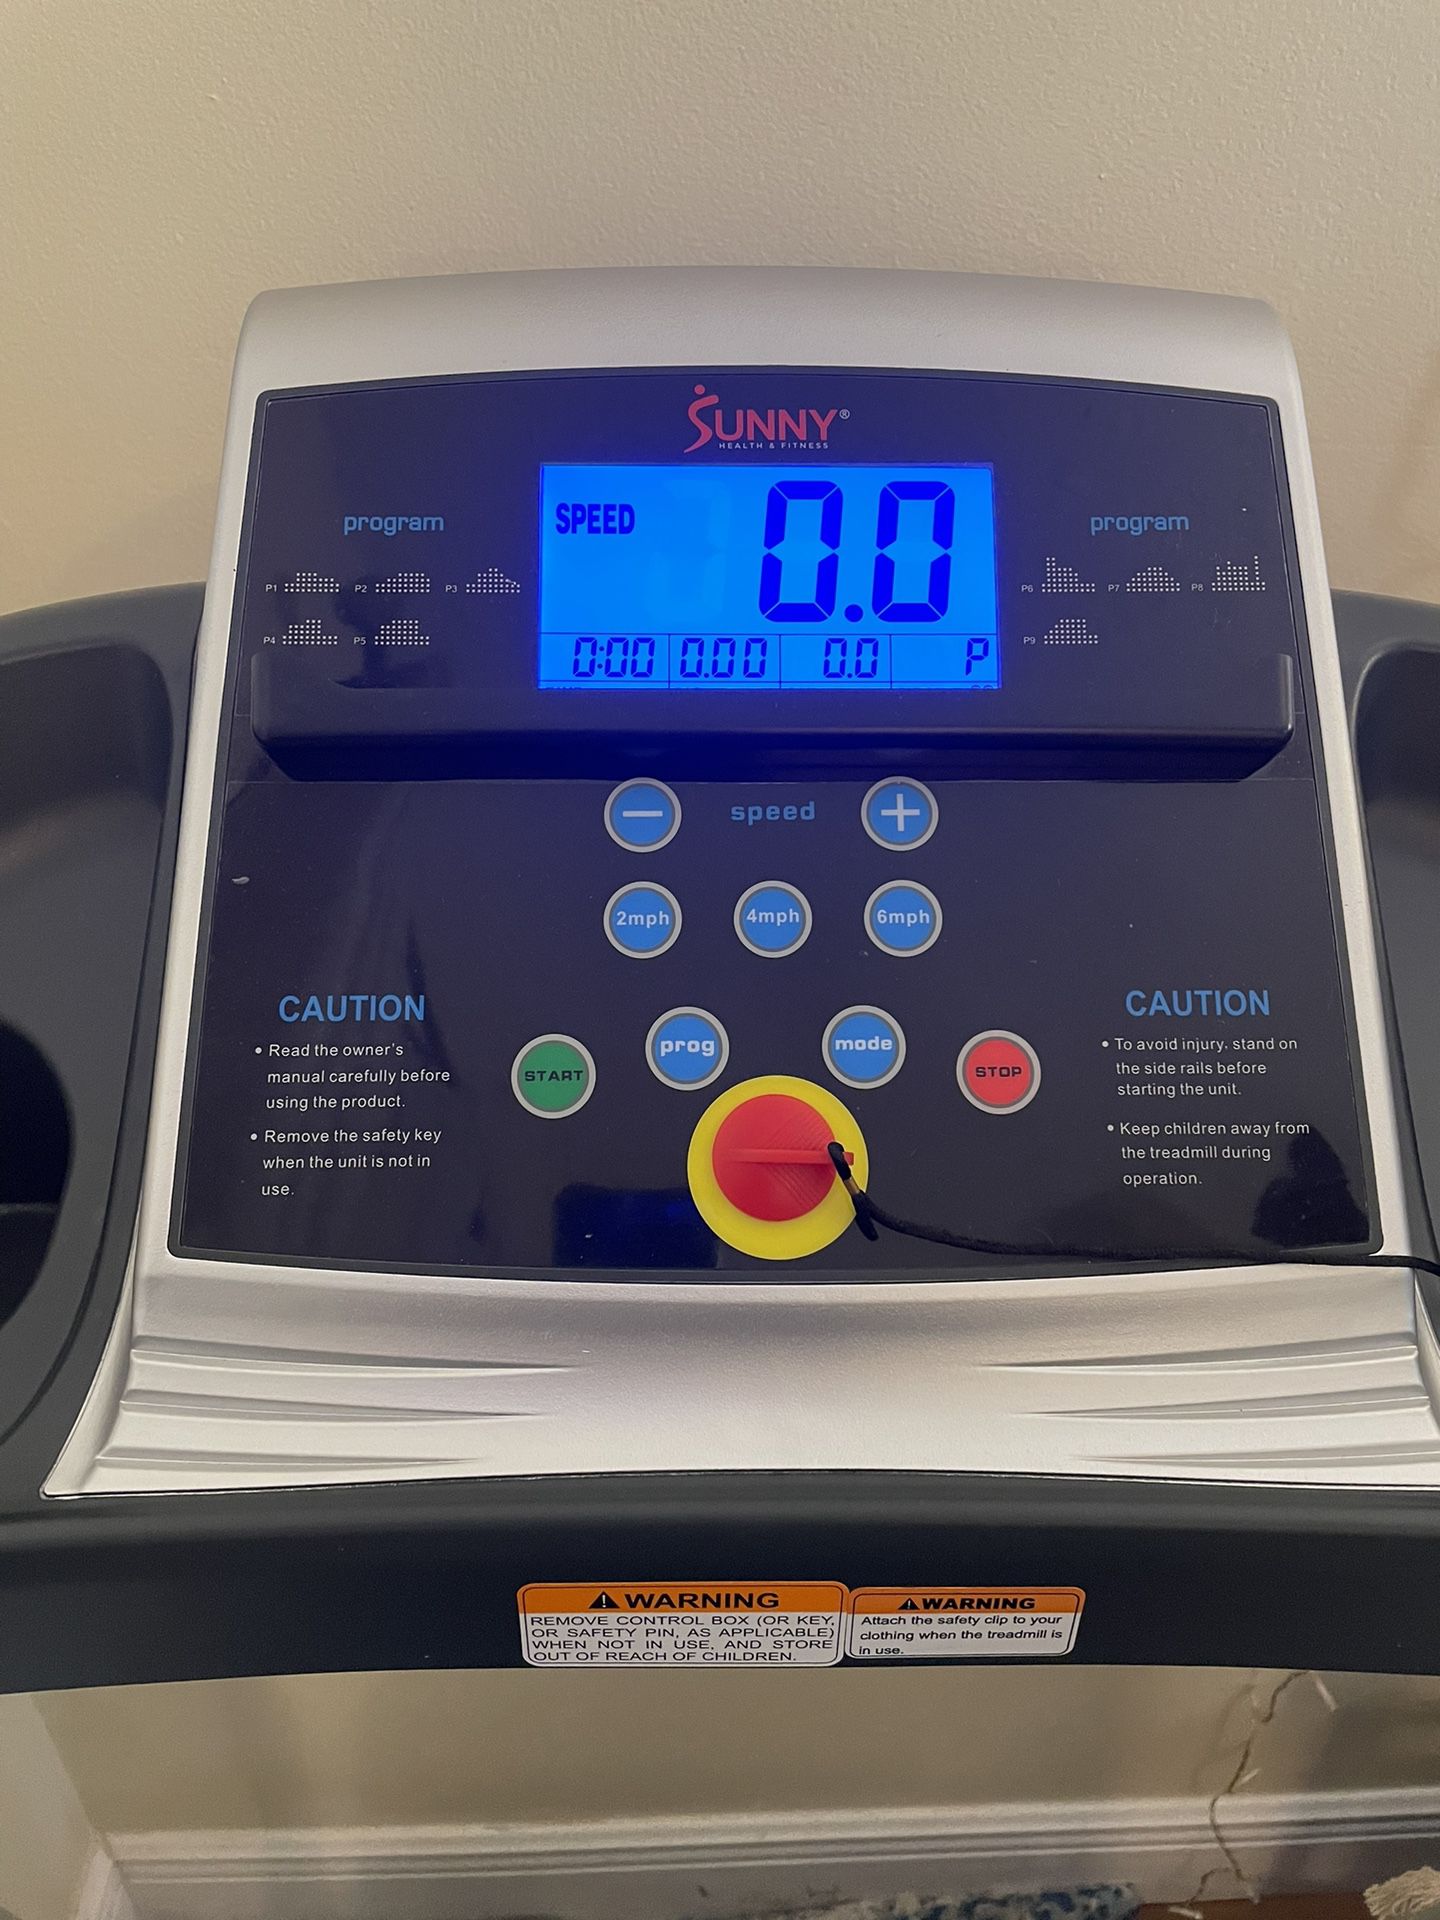 Fitness Premium Folding Incline Treadmill 